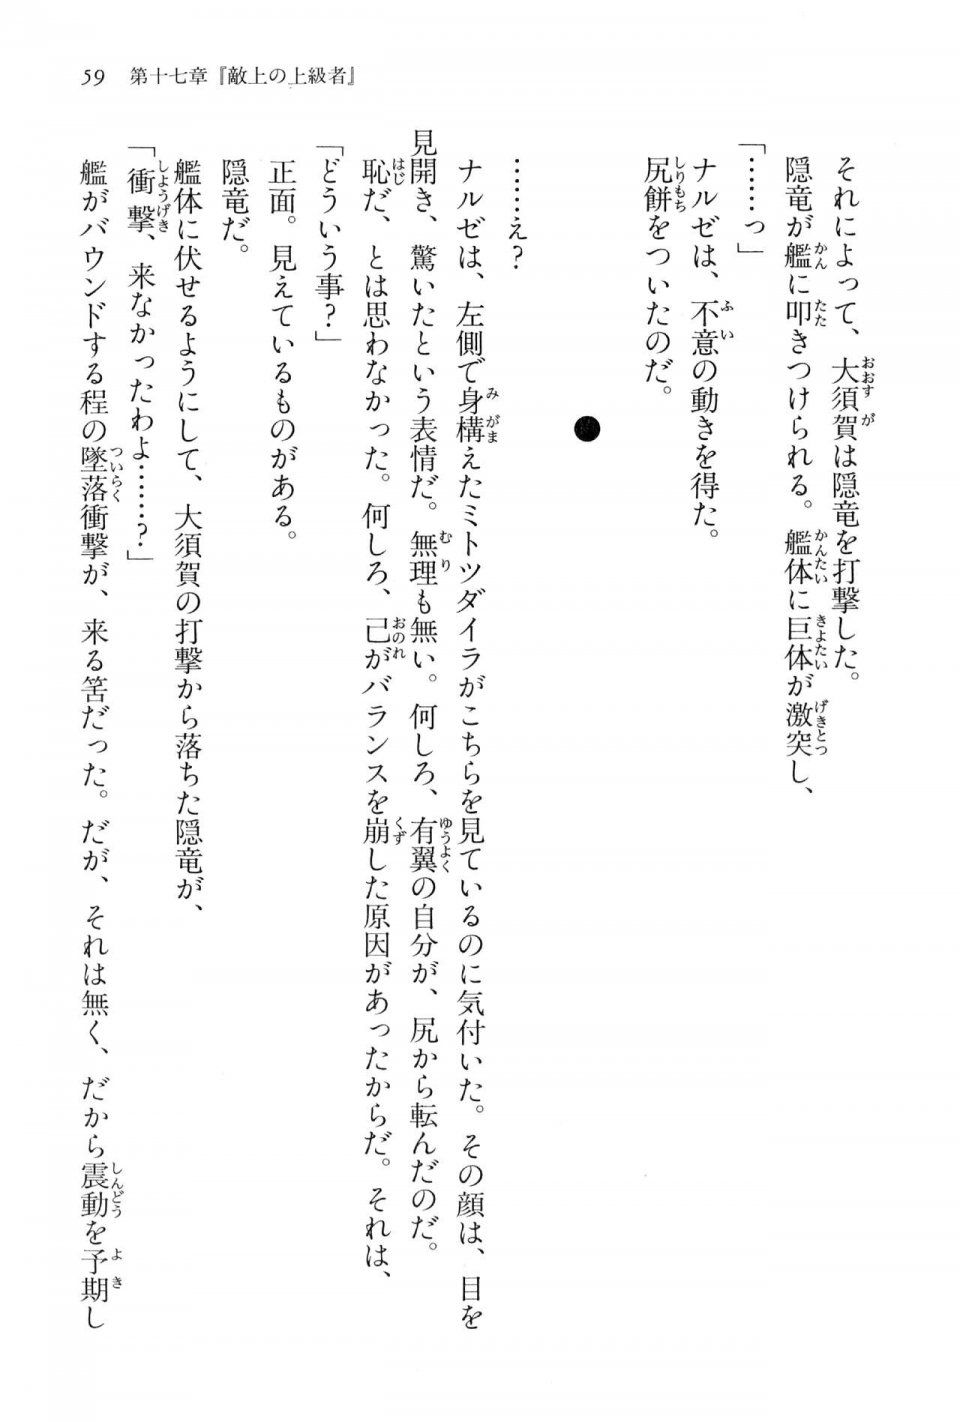 Kyoukai Senjou no Horizon BD Special Mininovel Vol 4(2B) - Photo #63